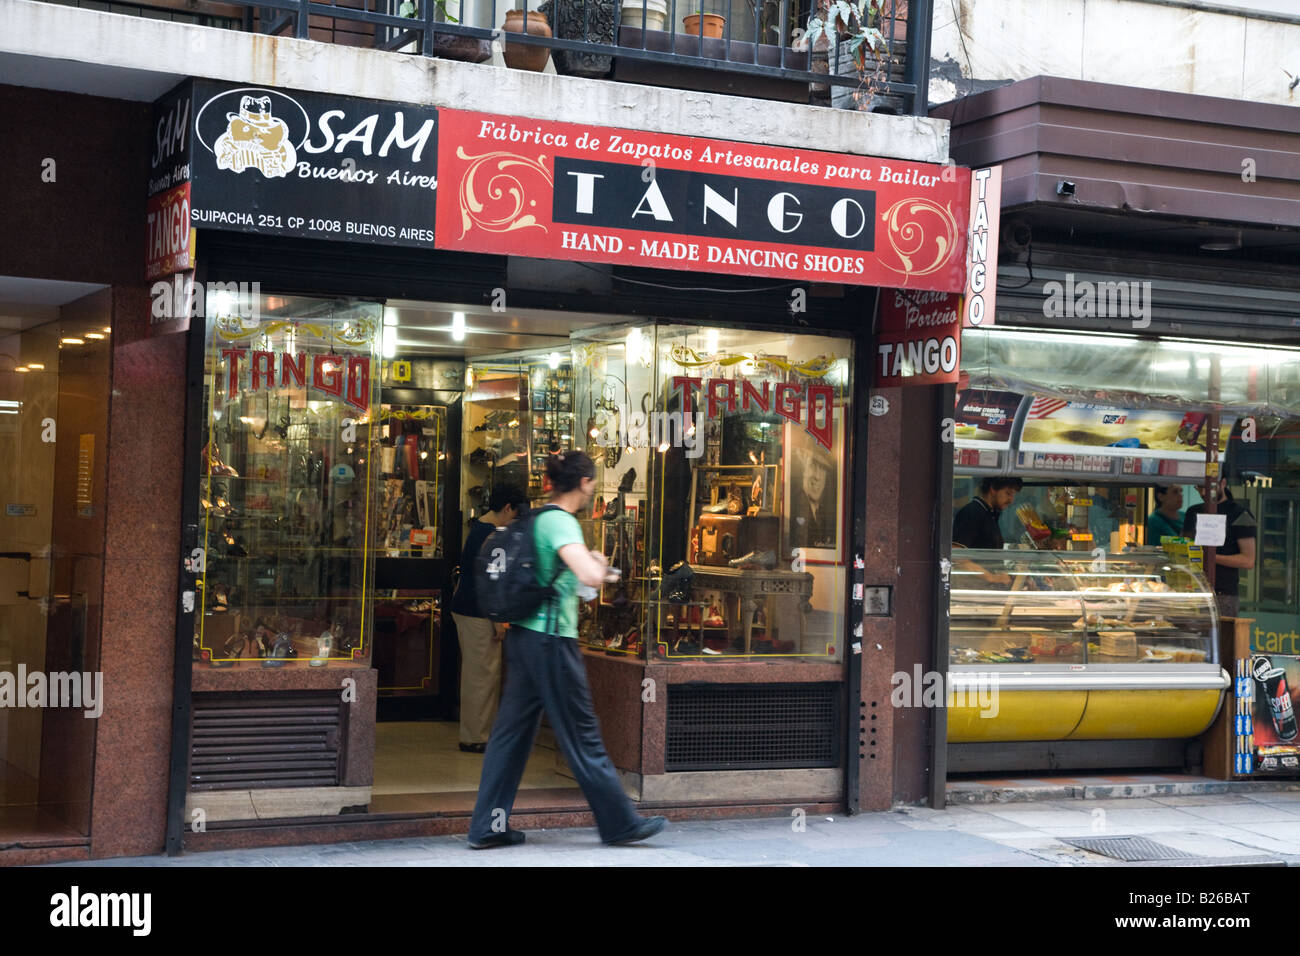 Tango Shoes Shop, Buenos Aires, Argentina Stock Photo - Alamy